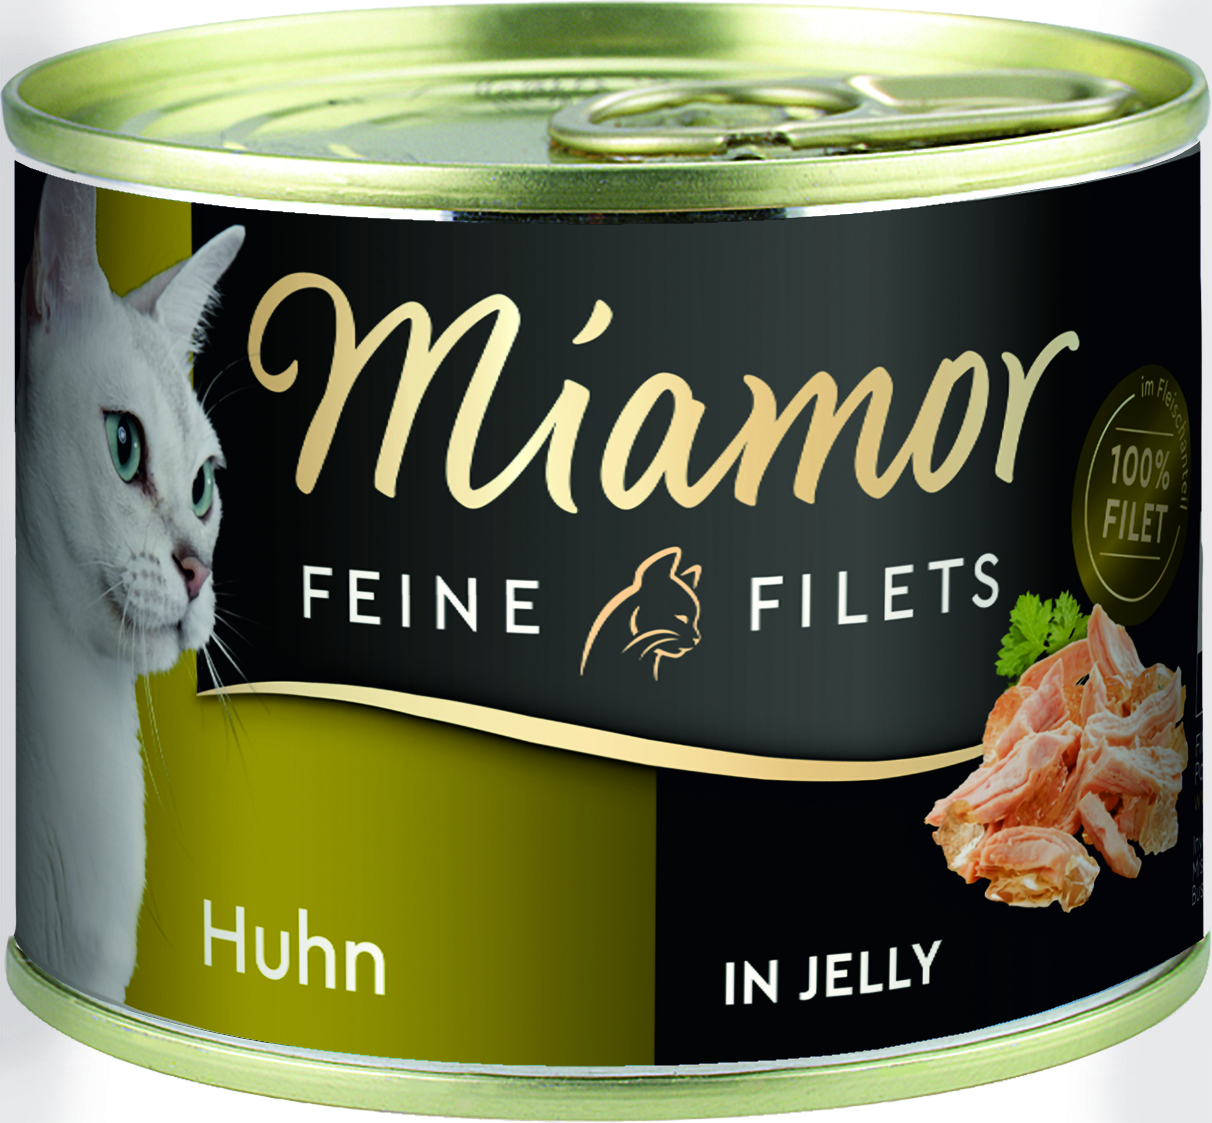 Miamor Feine Filets Huhn in Jelly 185g Dose